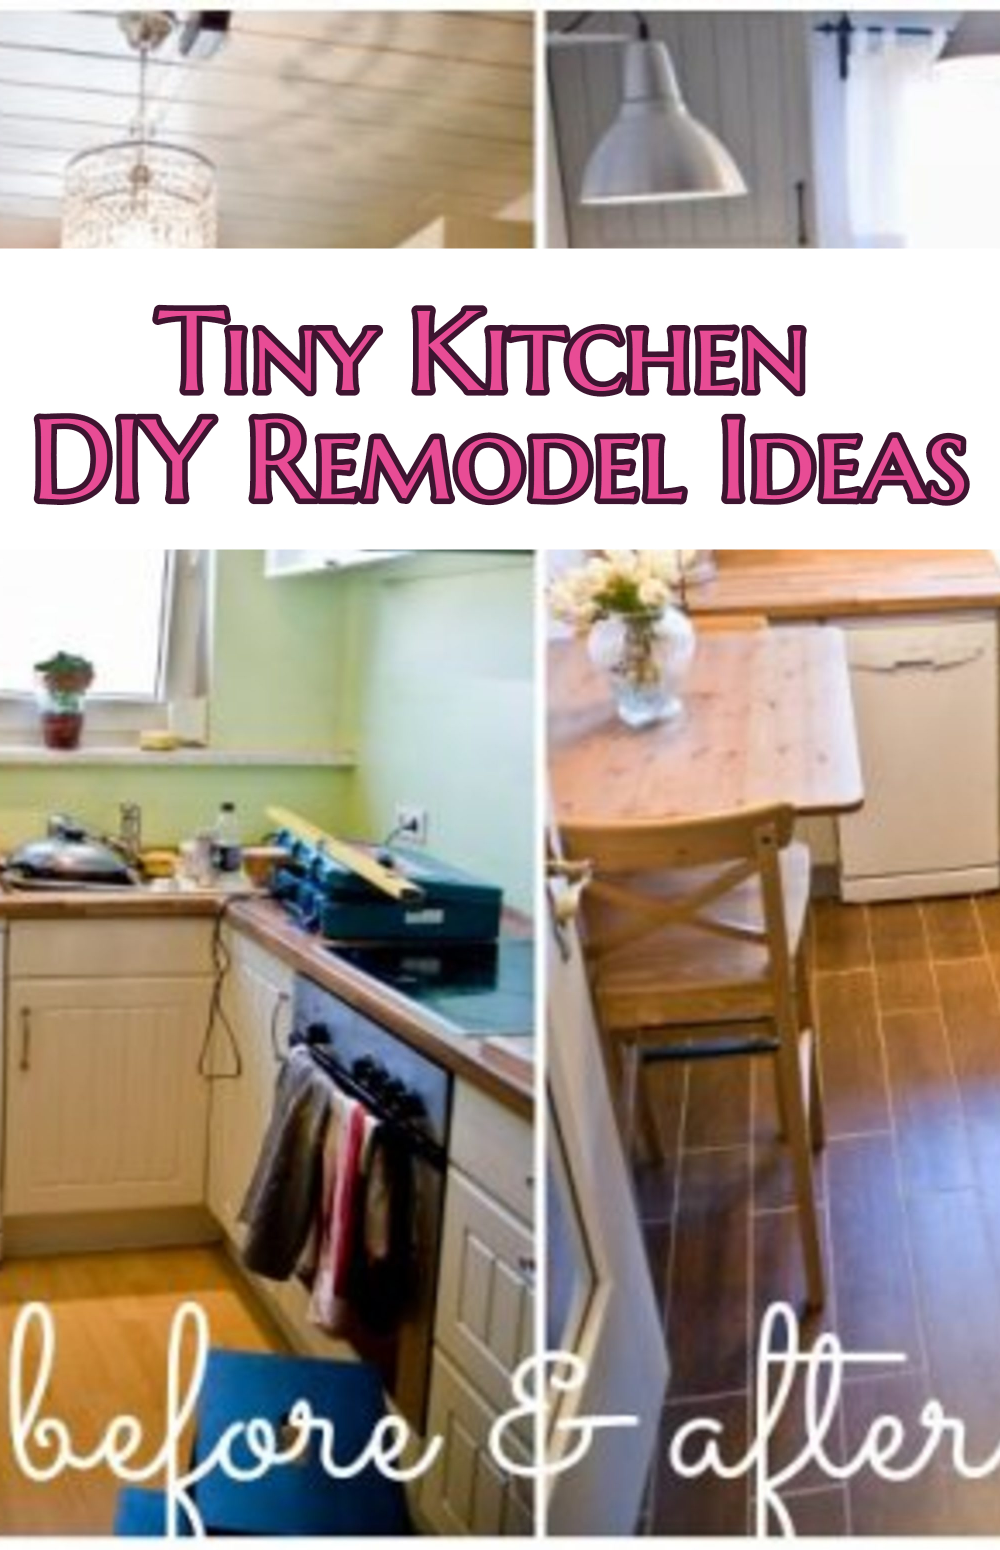 Design Ideas For Kitchen Shelving And Racks Diy